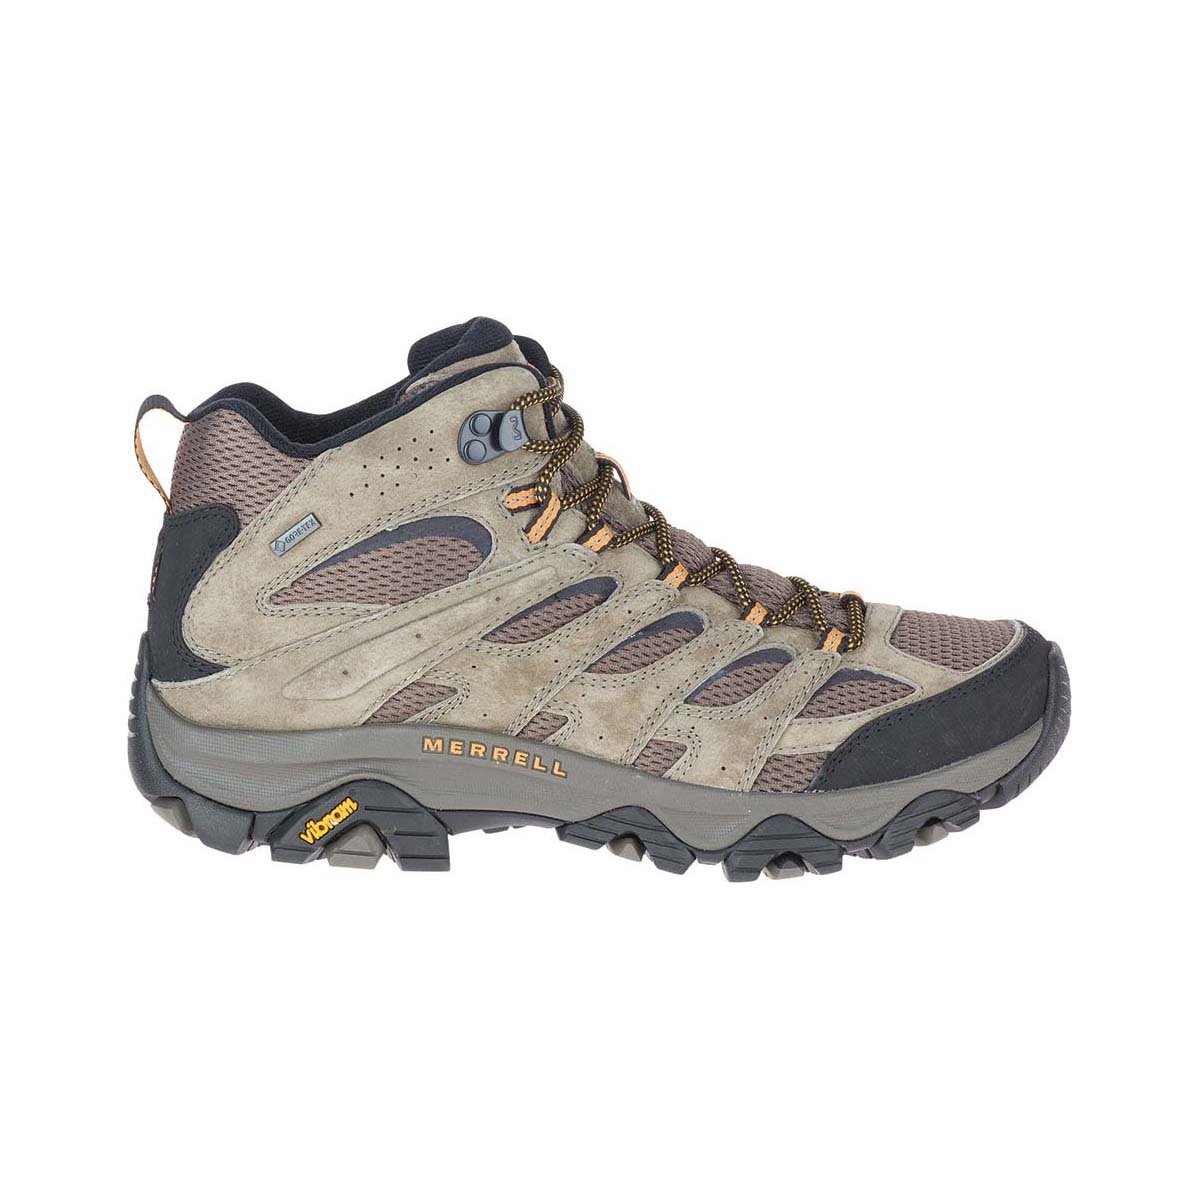 Merrell Men's Moab Mid GTX Hiking Boots 11